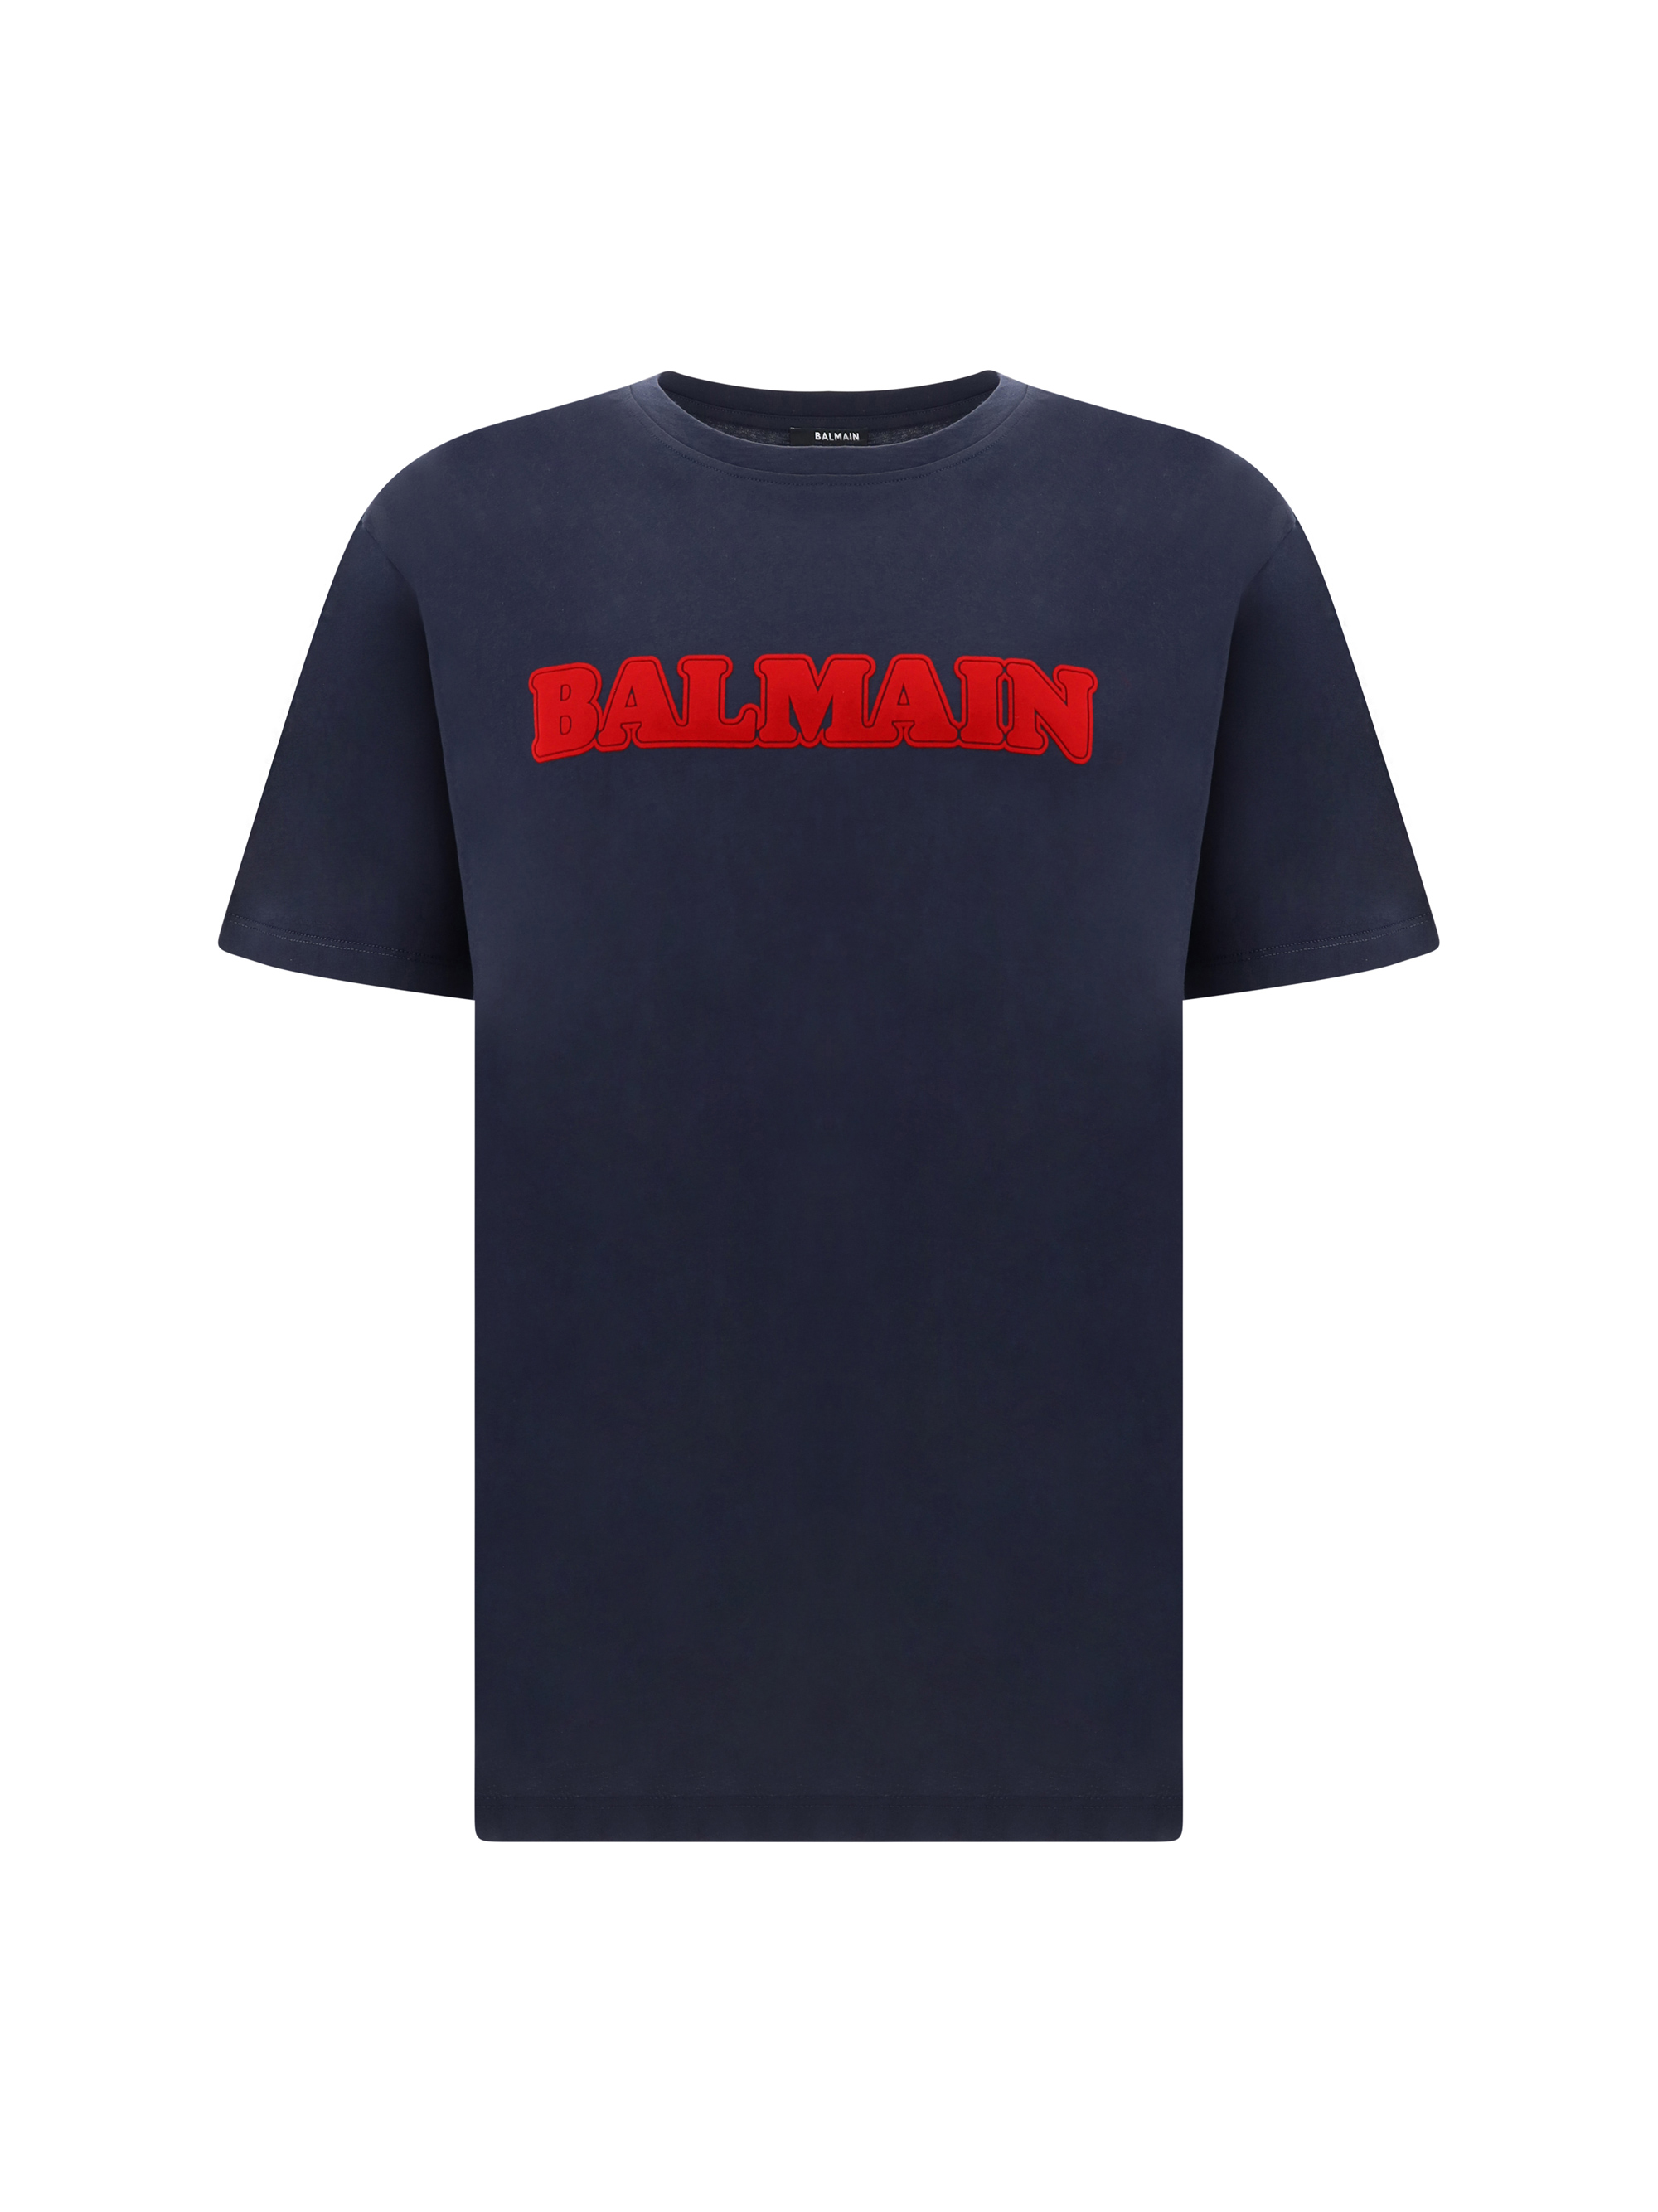 balmain - retro flock t-shirt